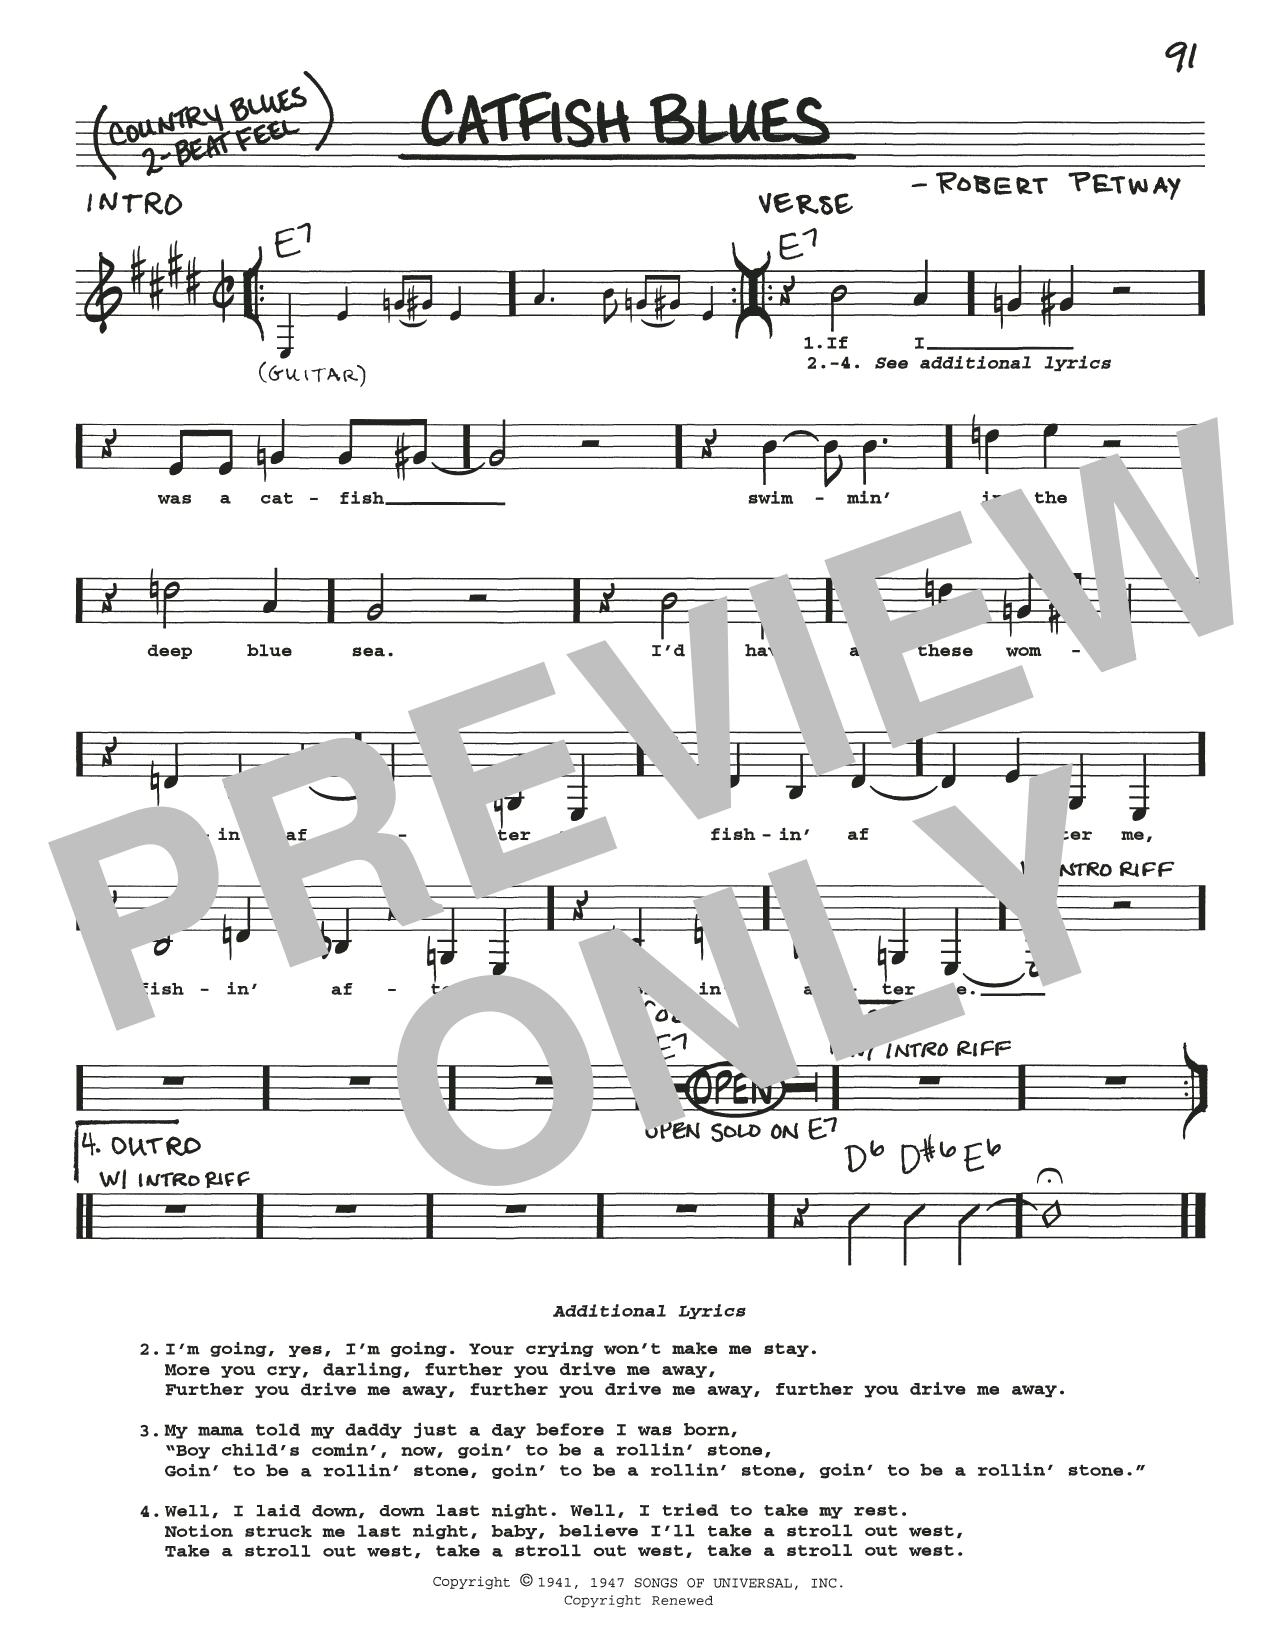 Robert Petway Catfish Blues Sheet Music Notes & Chords for Real Book – Melody, Lyrics & Chords - Download or Print PDF